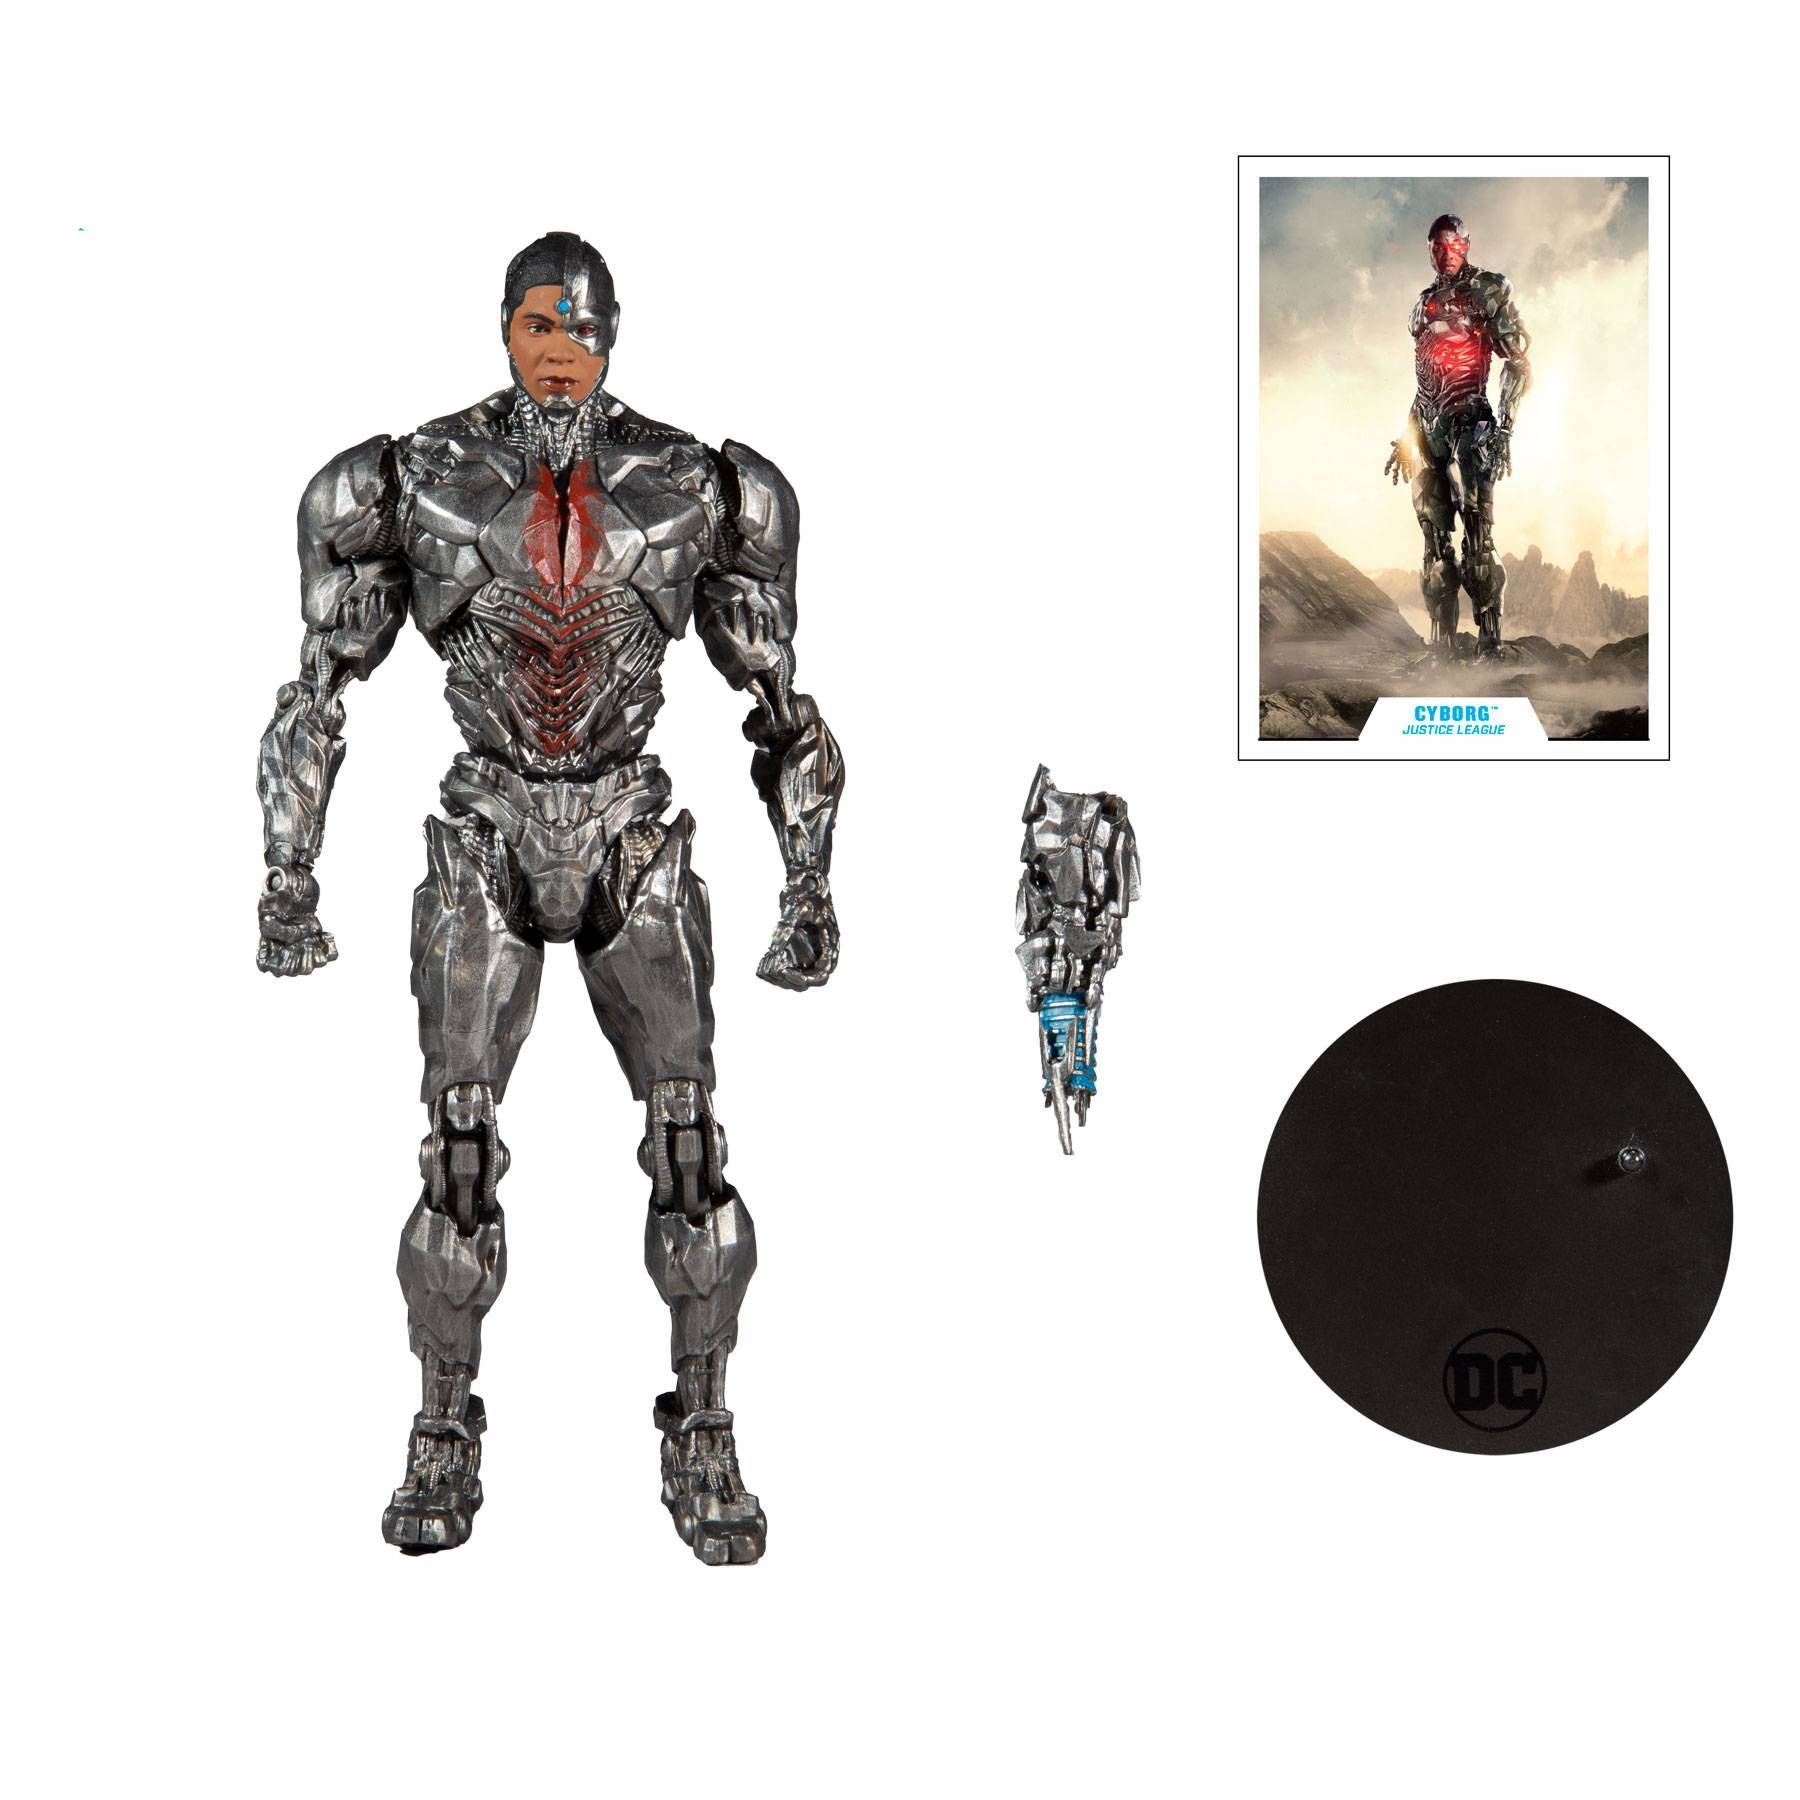 DC Justice League Cyborg 7 Inch Scale Action Figure Case